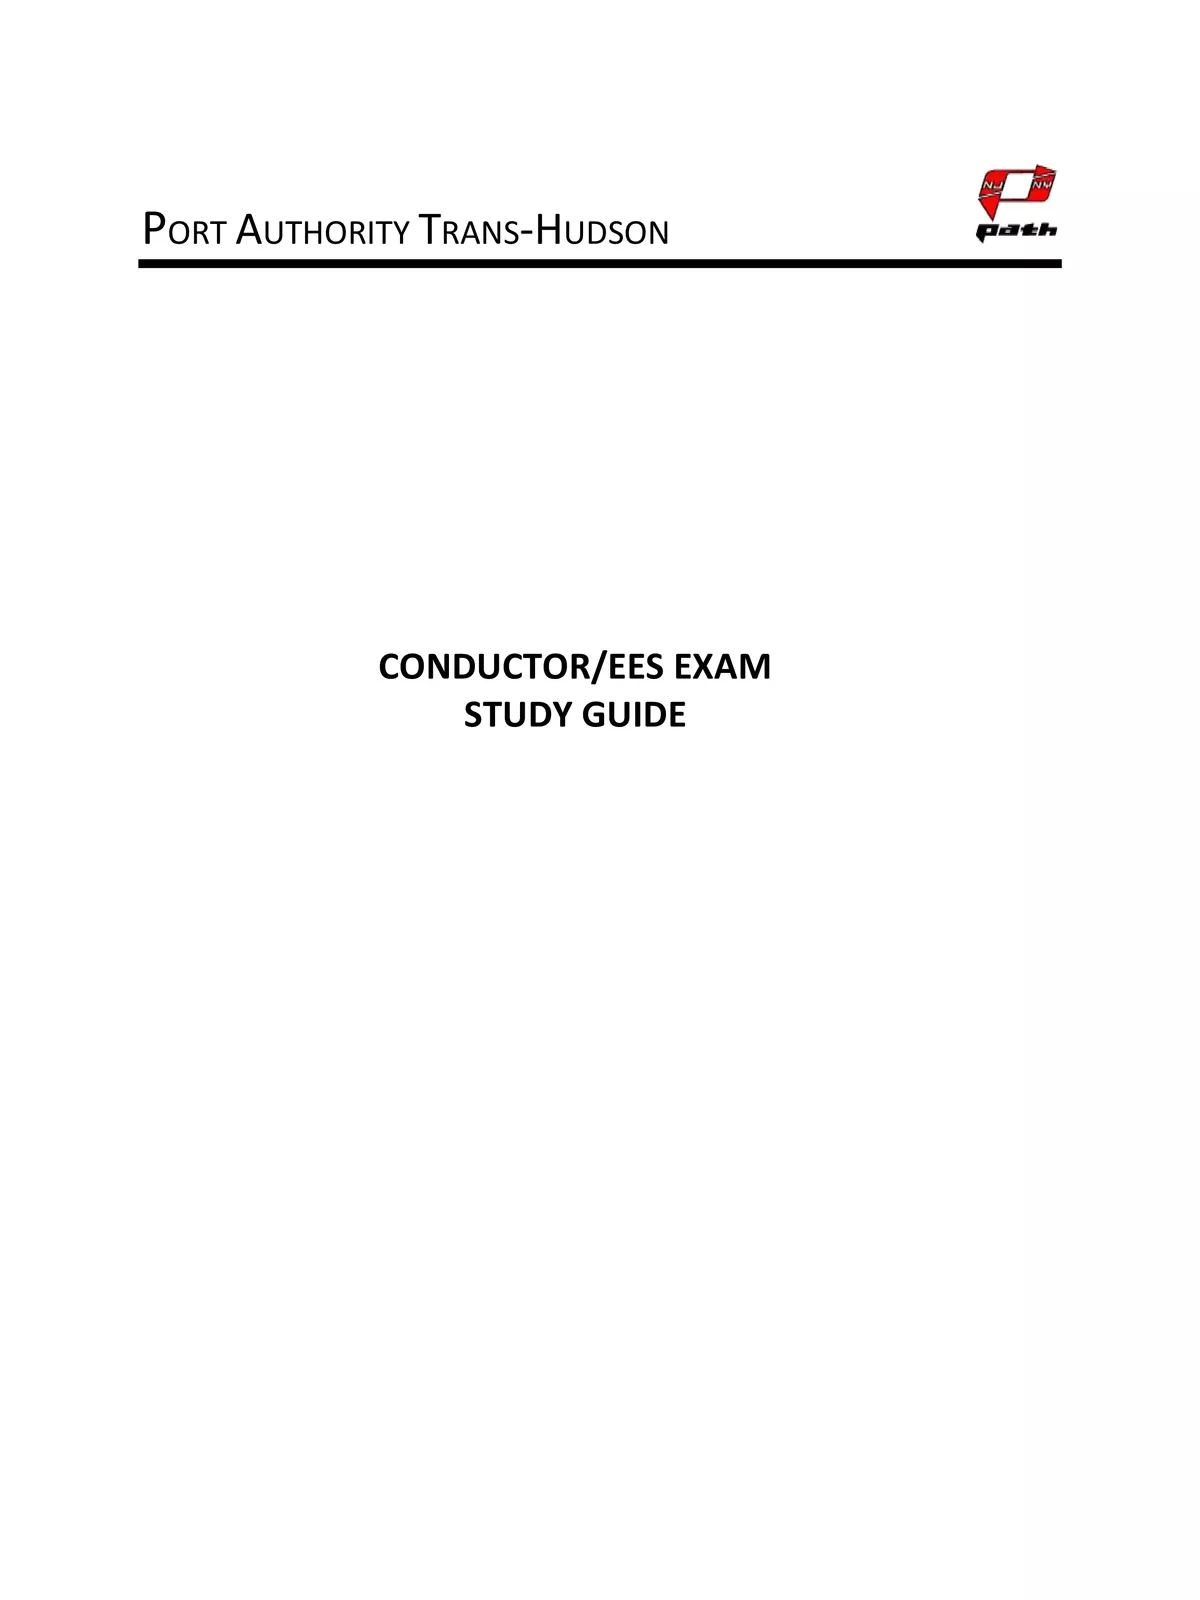 Conductor Exam Book